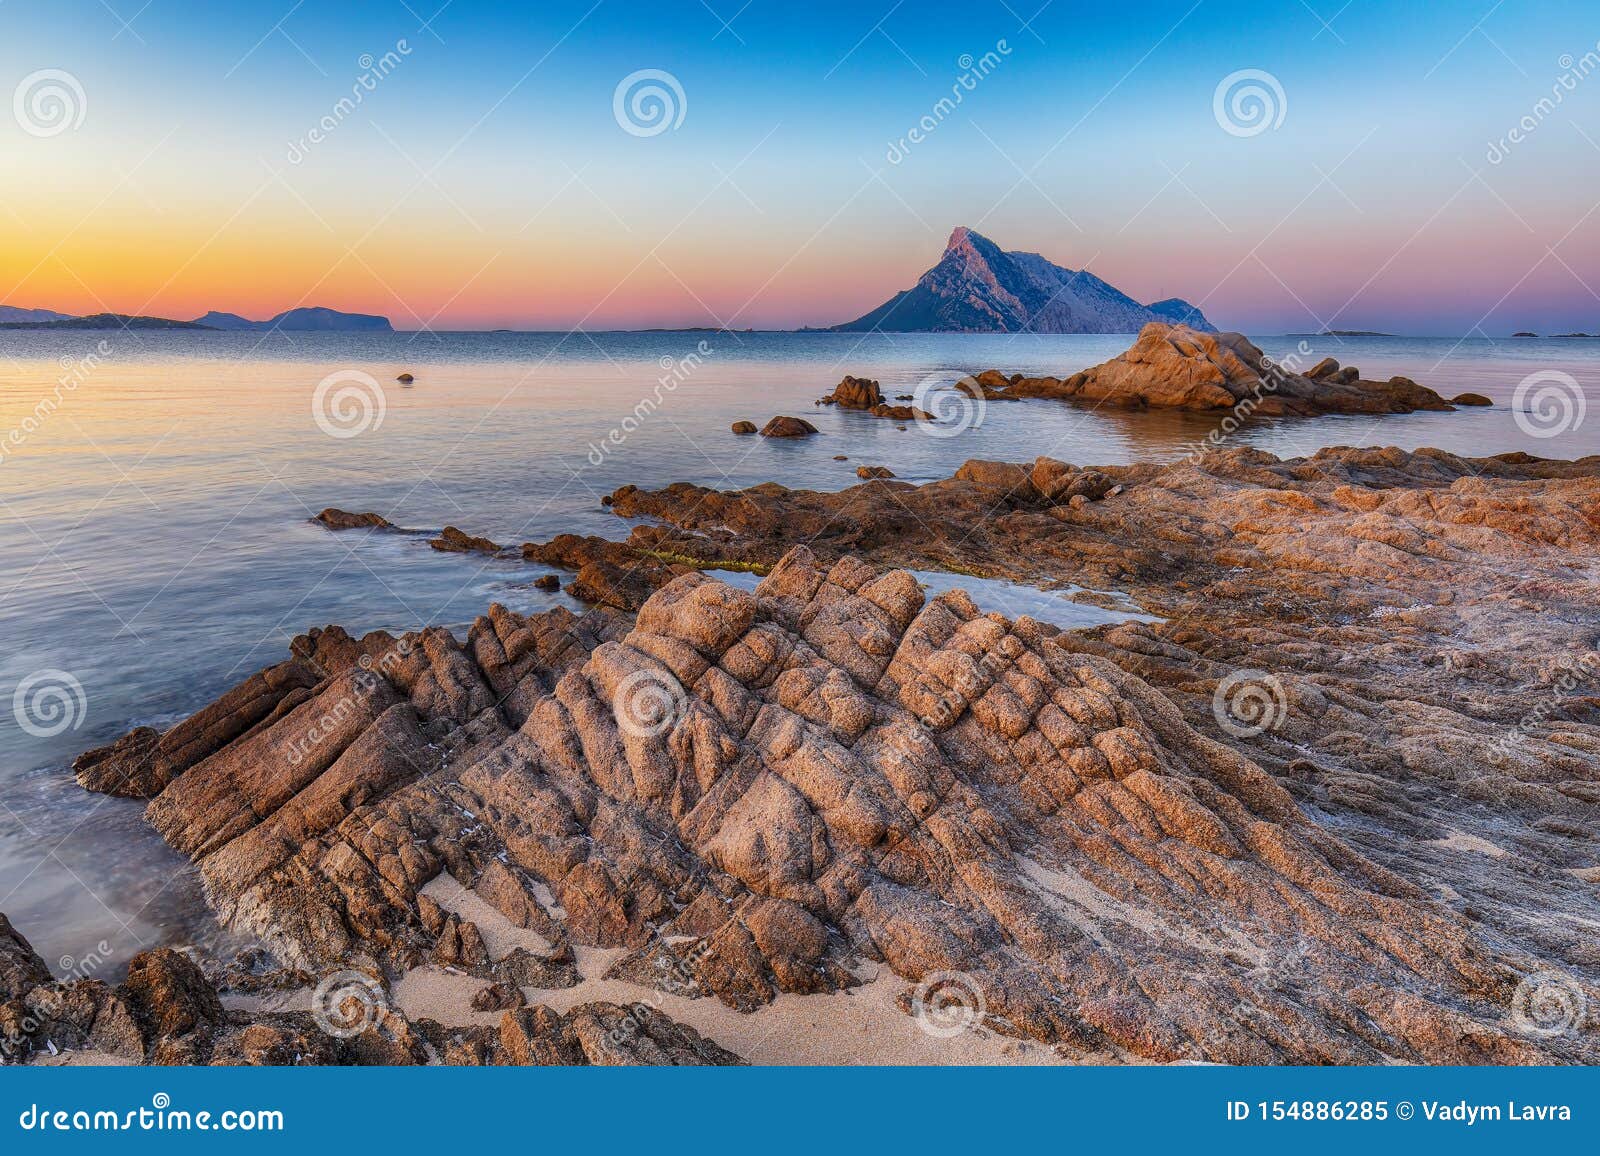 fantastic azure water with rocks near beach porto taverna at sunset